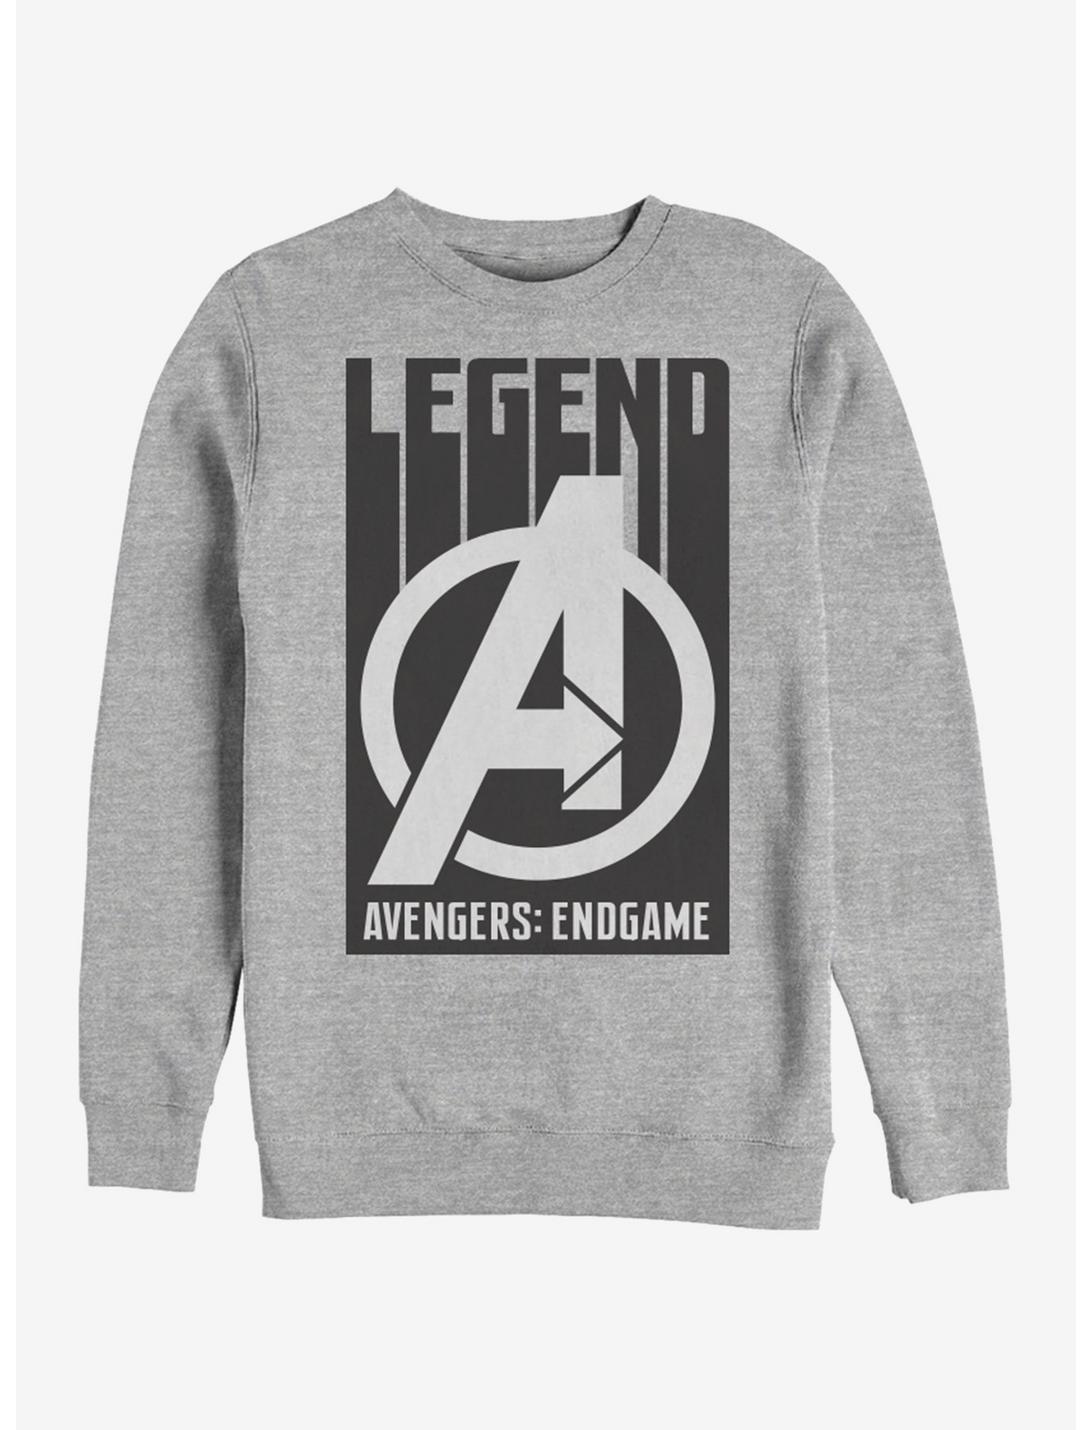 Marvel Avengers: Endgame Avengers Legend Heathered Sweatshirt, ATH HTR, hi-res